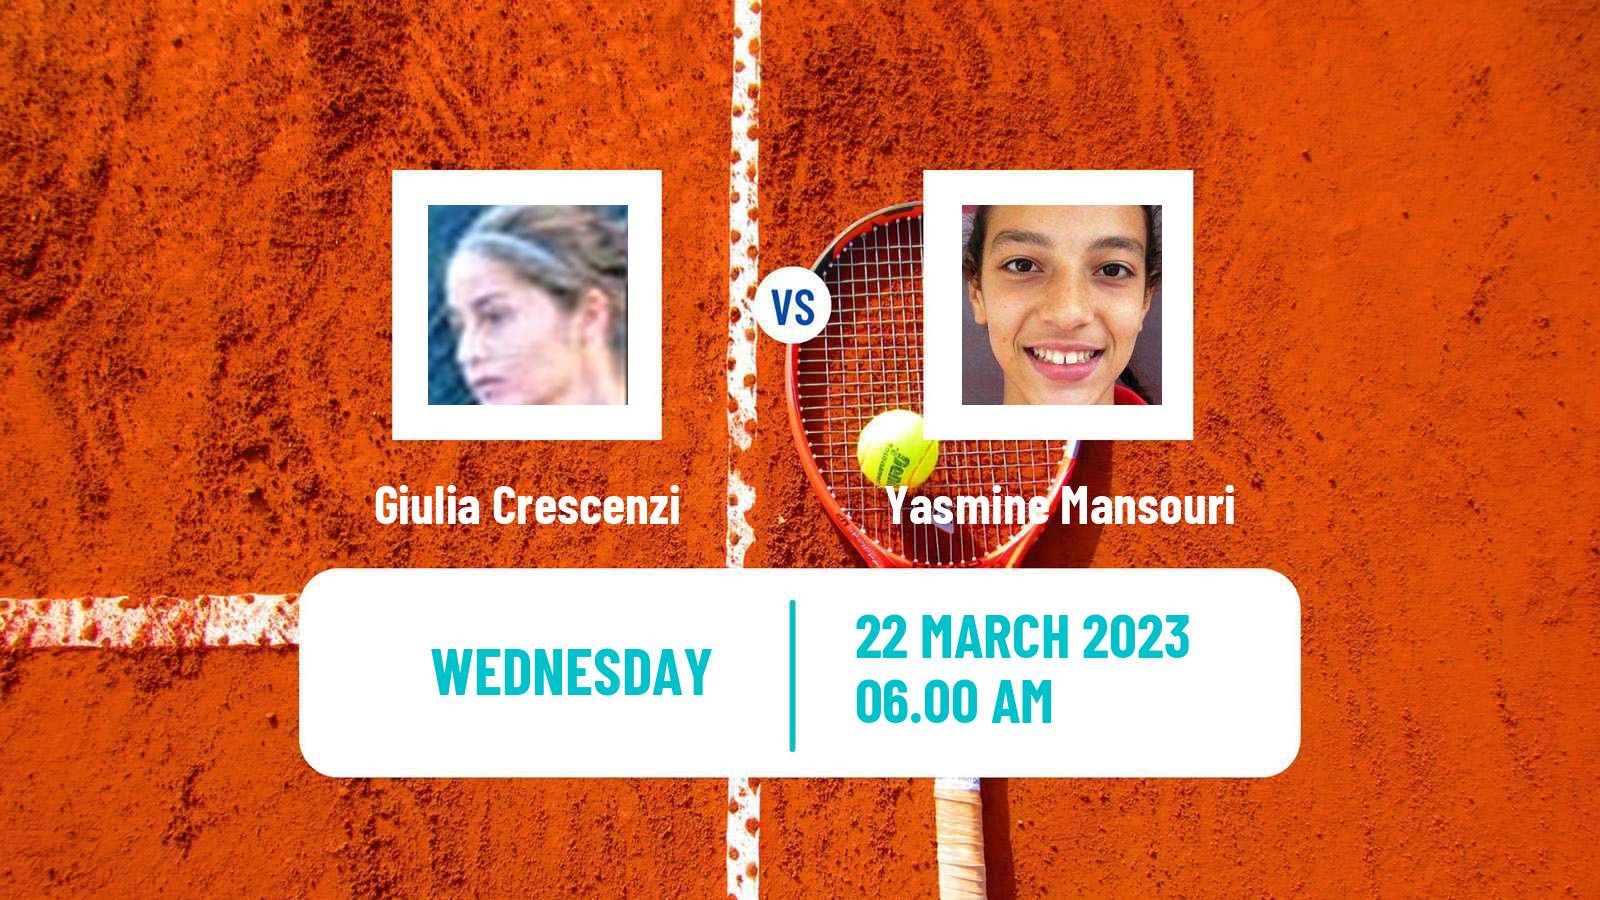 Tennis ITF Tournaments Giulia Crescenzi - Yasmine Mansouri